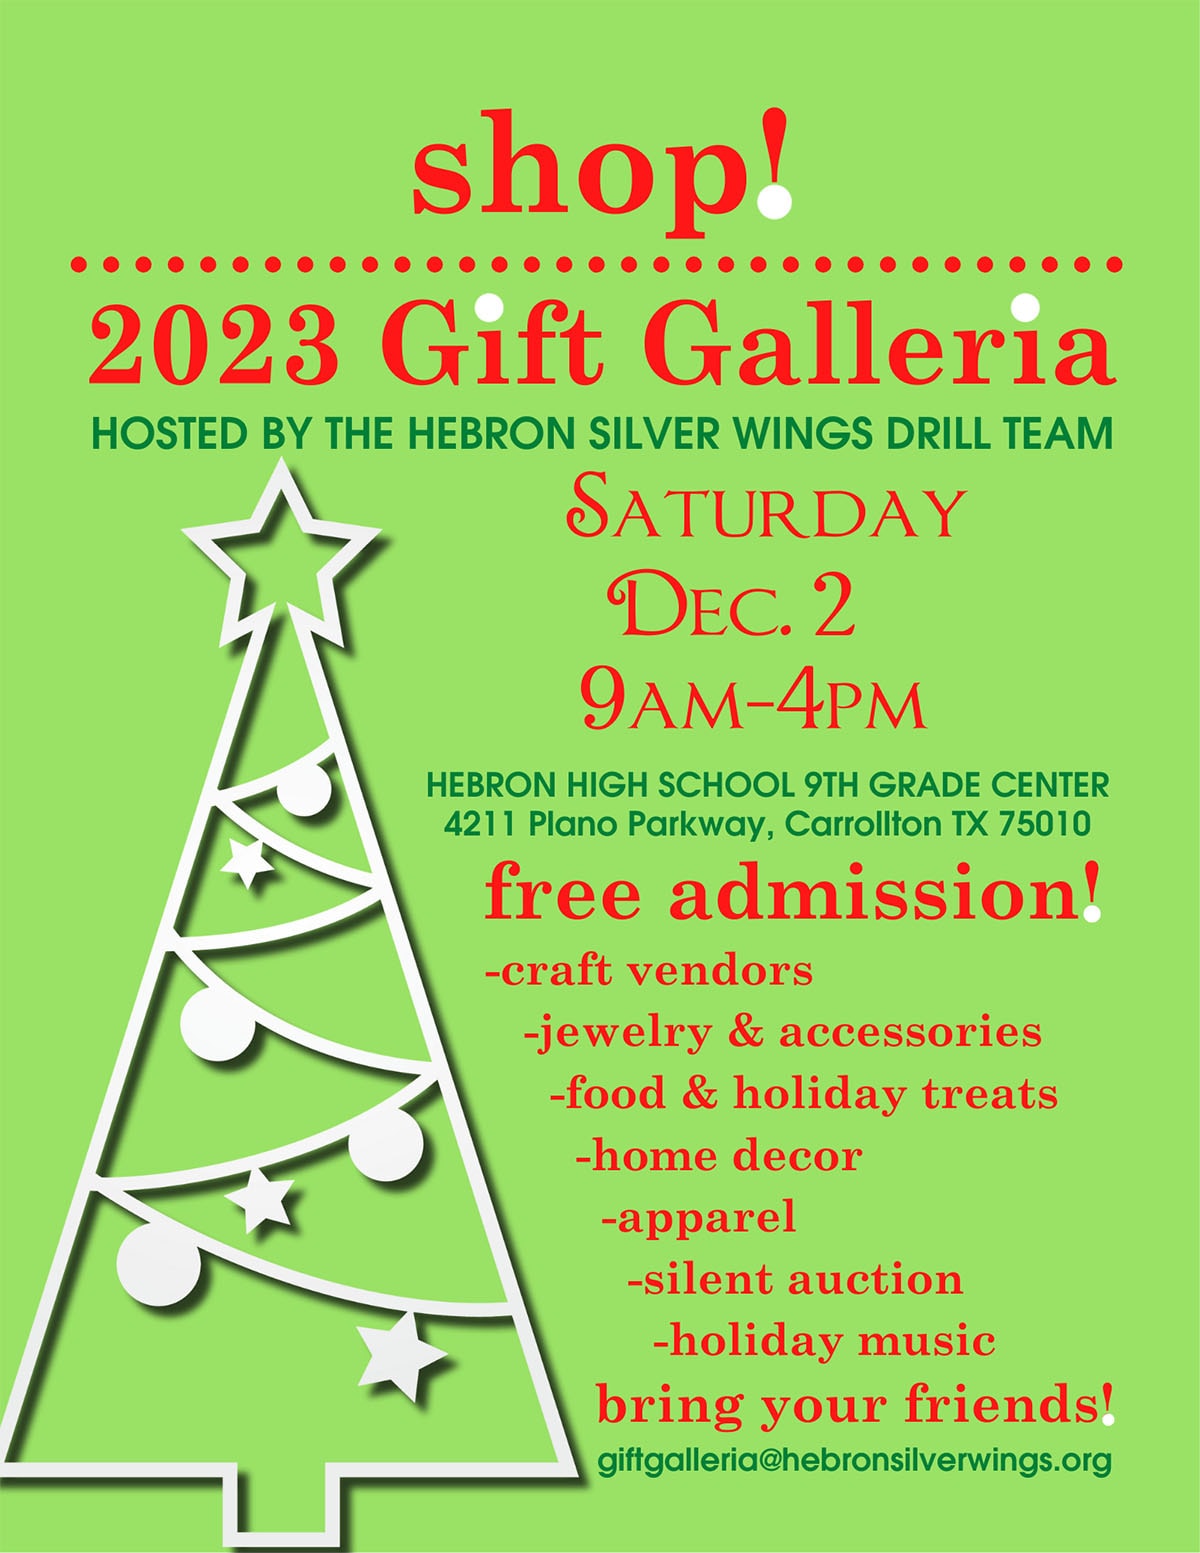 event flyer for 2023 gift galleria, details at link.